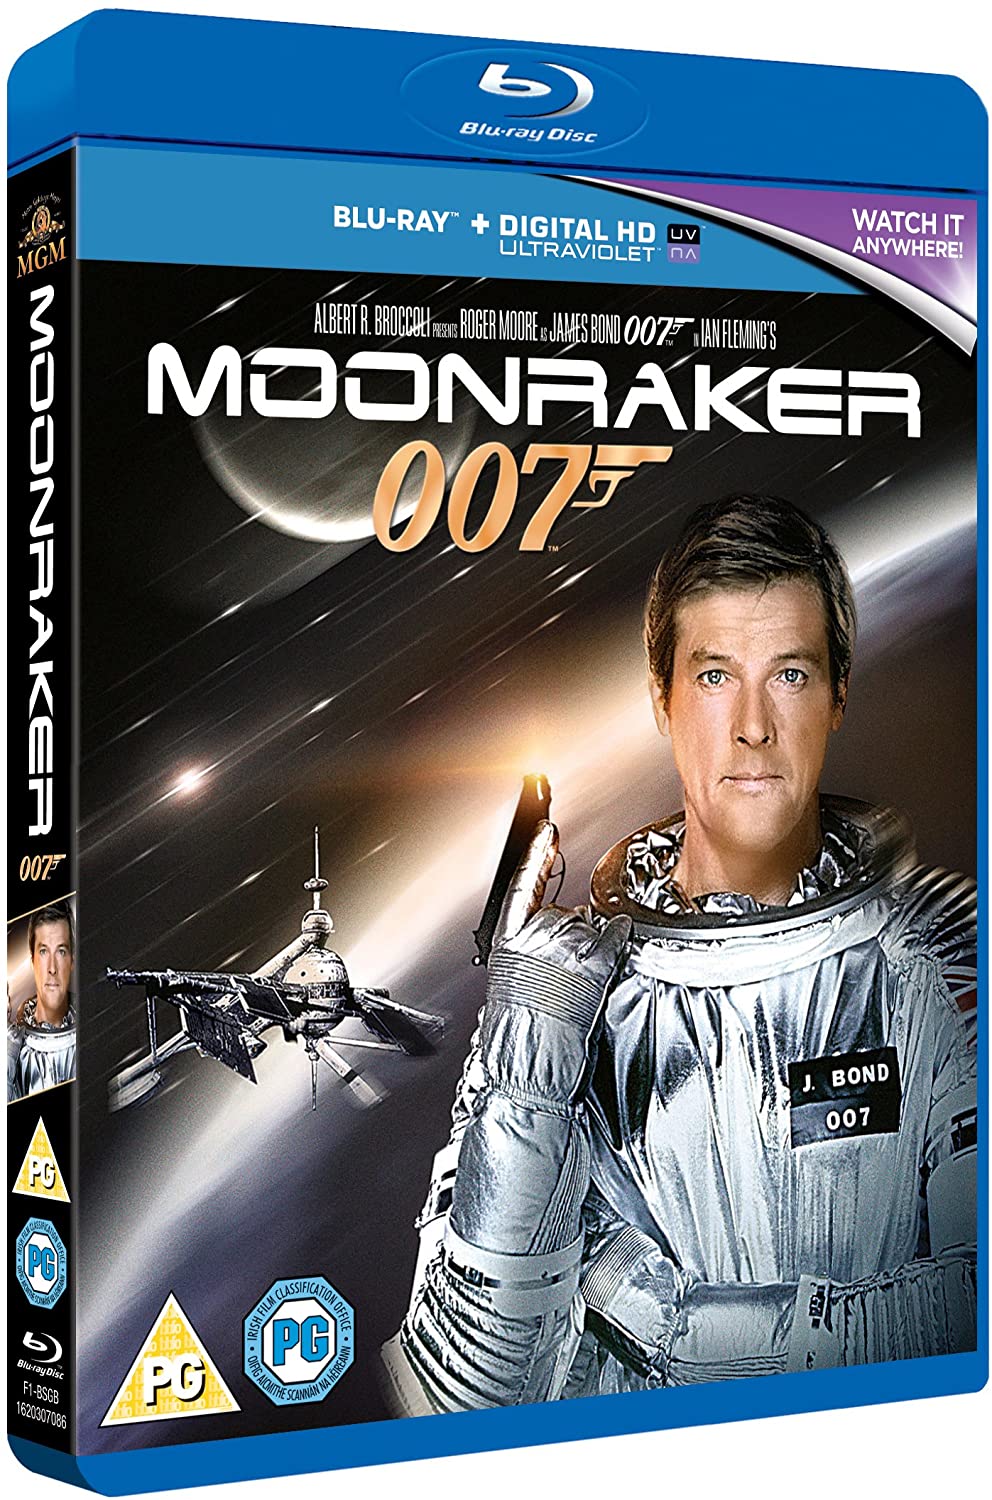 moonraker [Blu-ray] [1979]